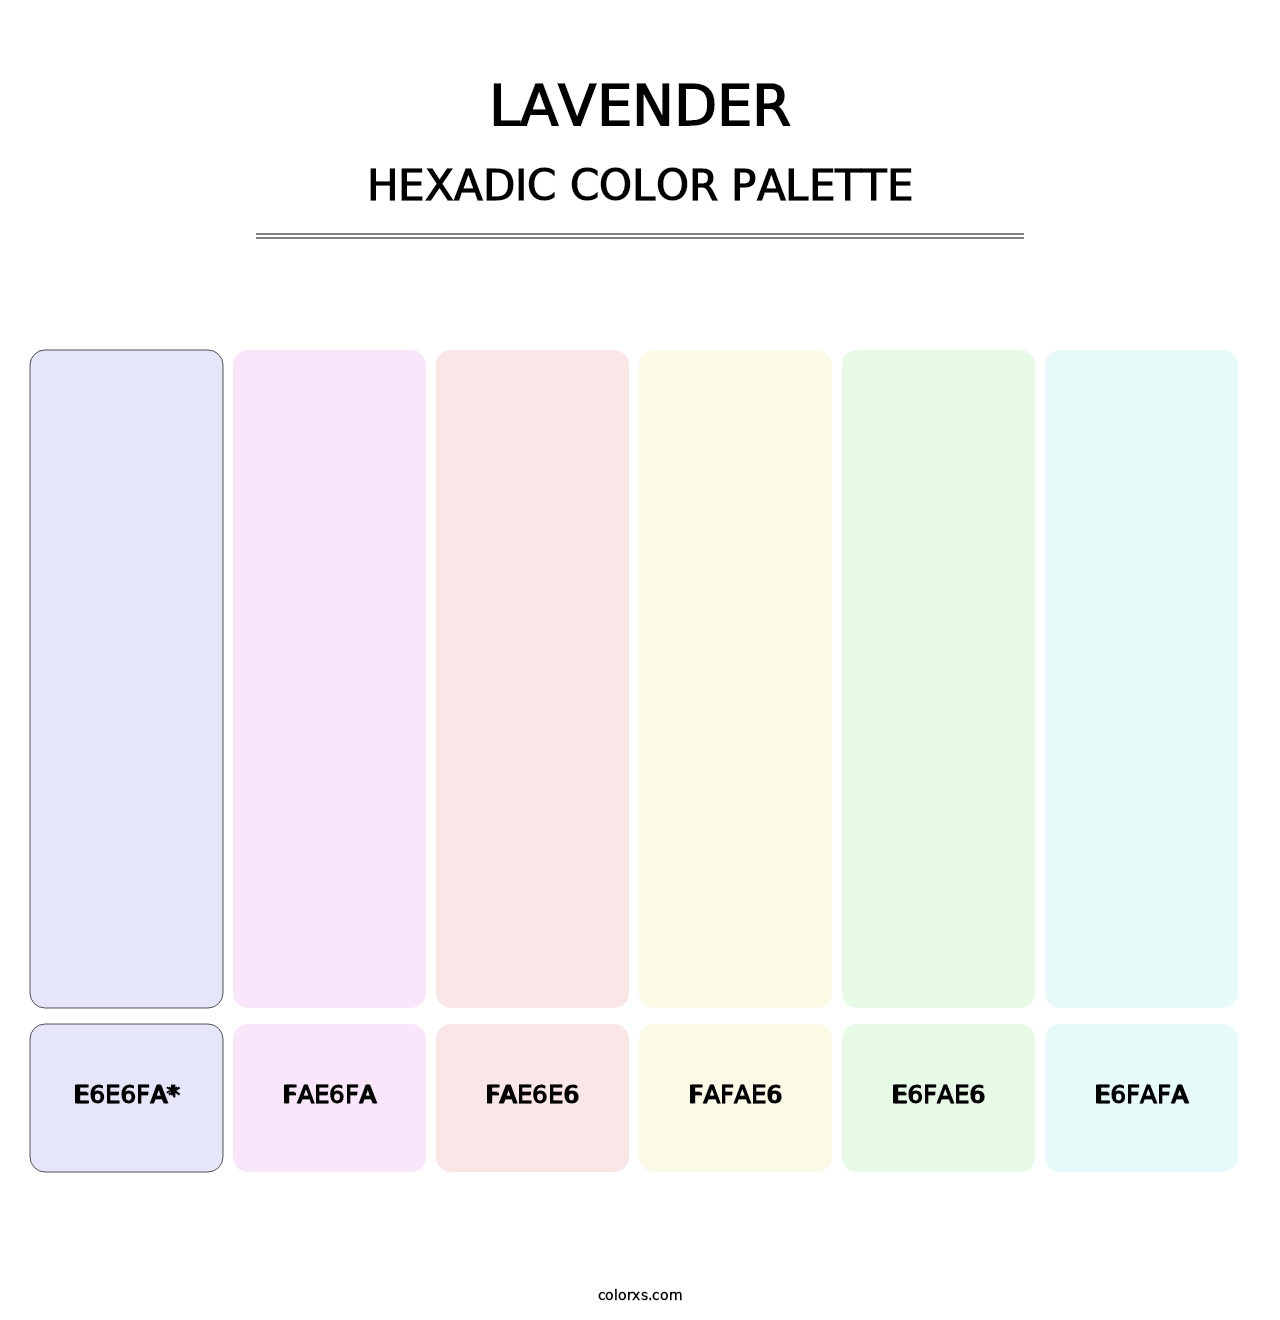 Lavender - Hexadic Color Palette